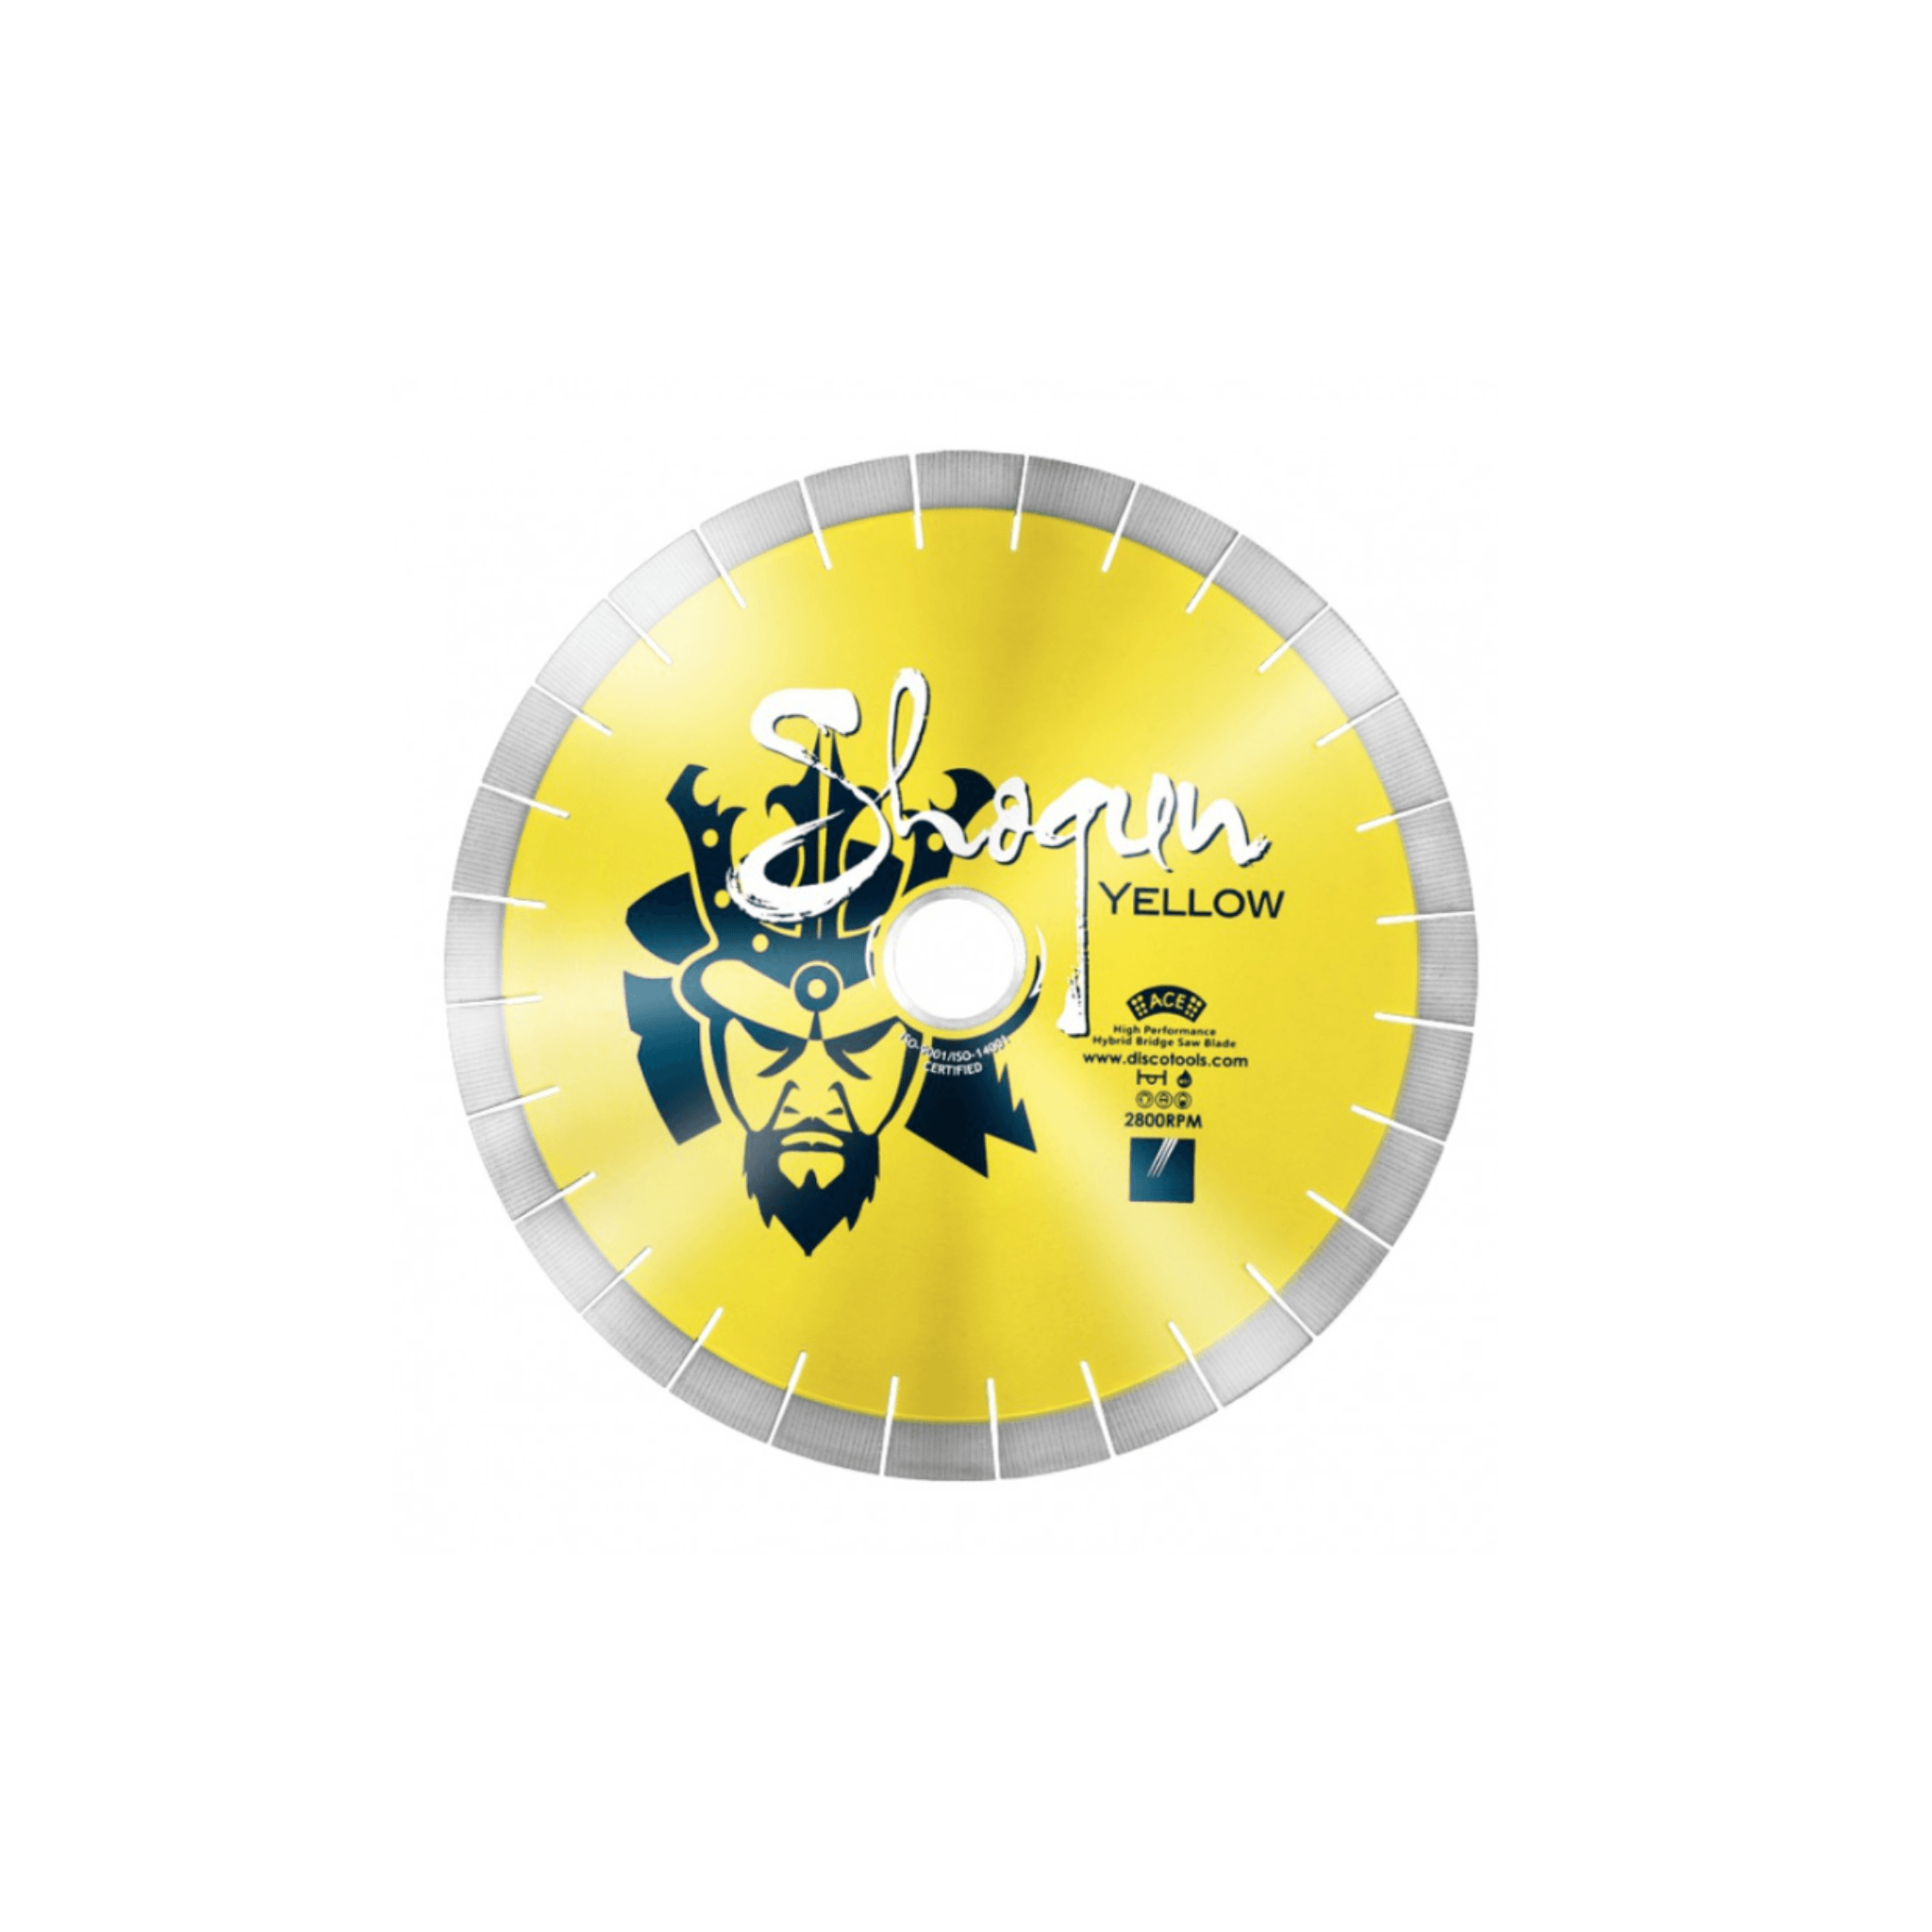 Disco Shogun Yellow 14" Blade - Direct Stone Tool Supply, Inc